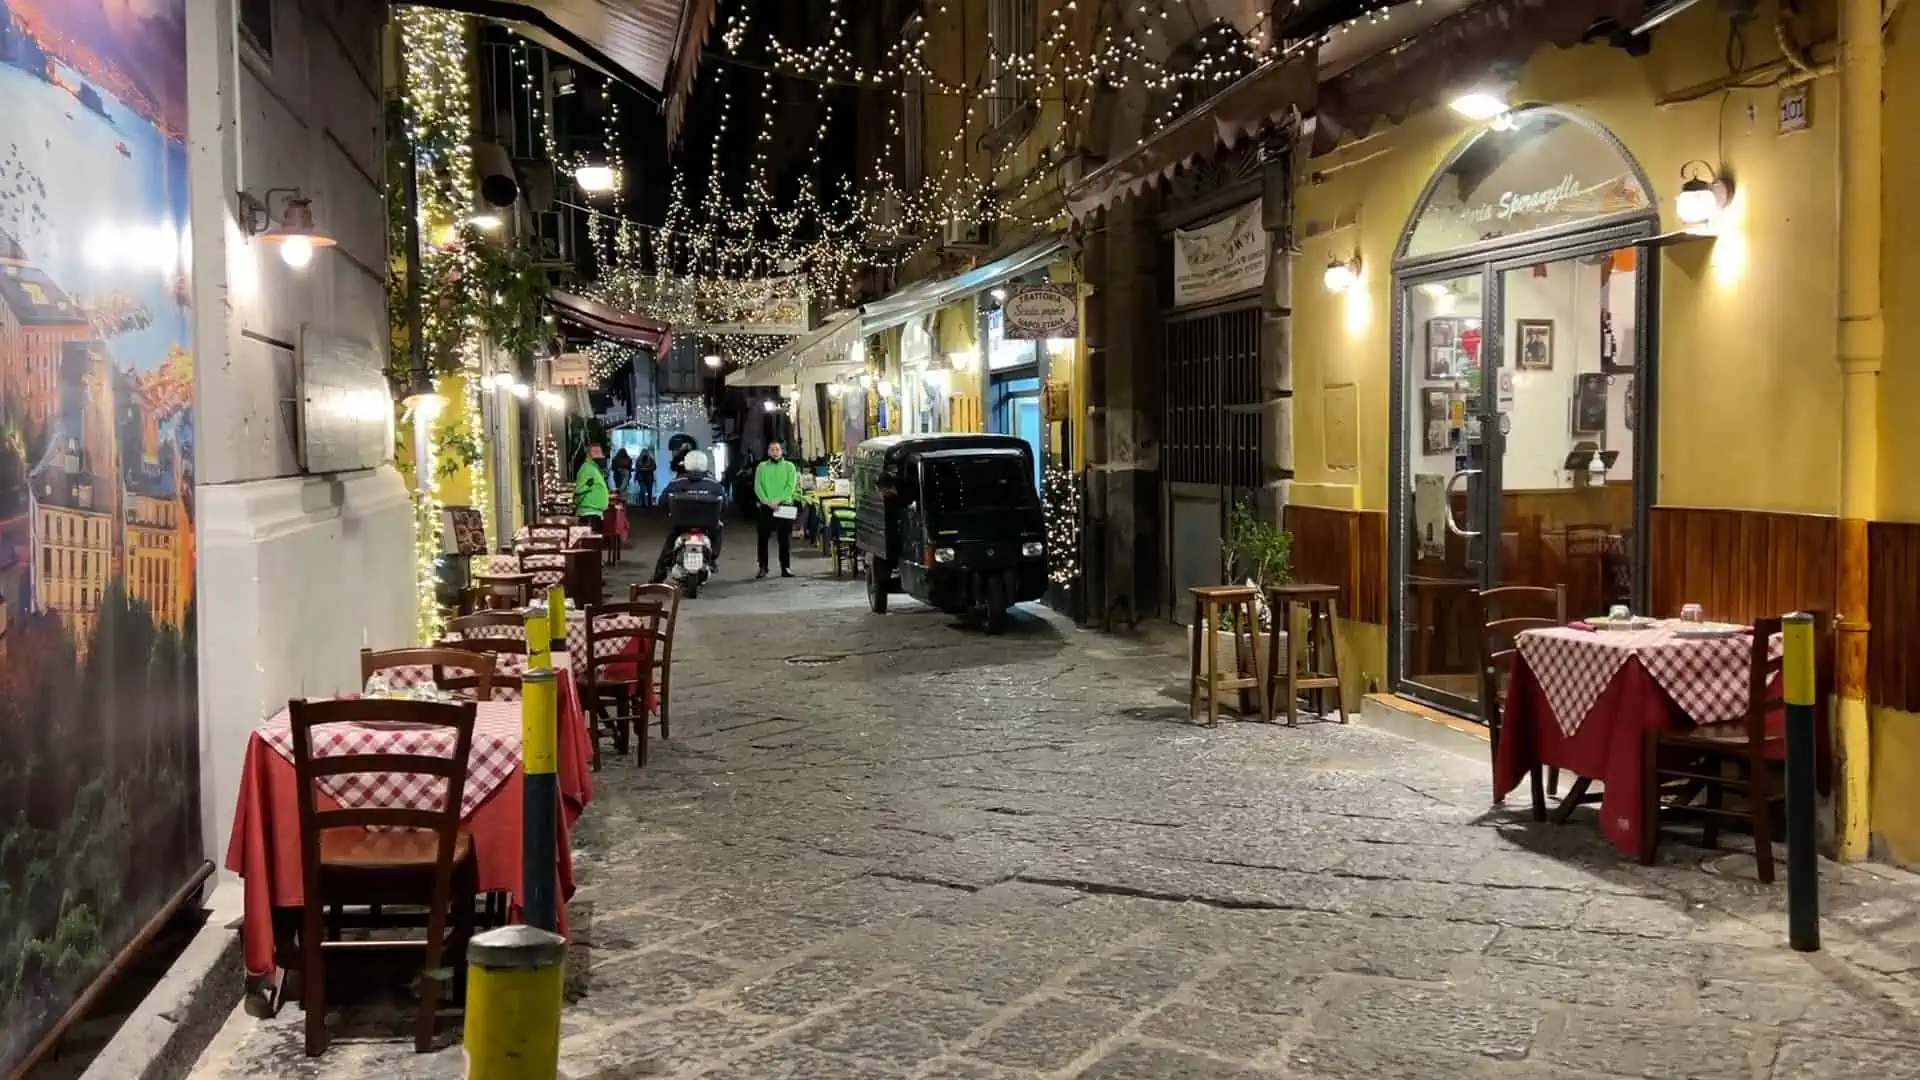 Restaurant in Naples Italy